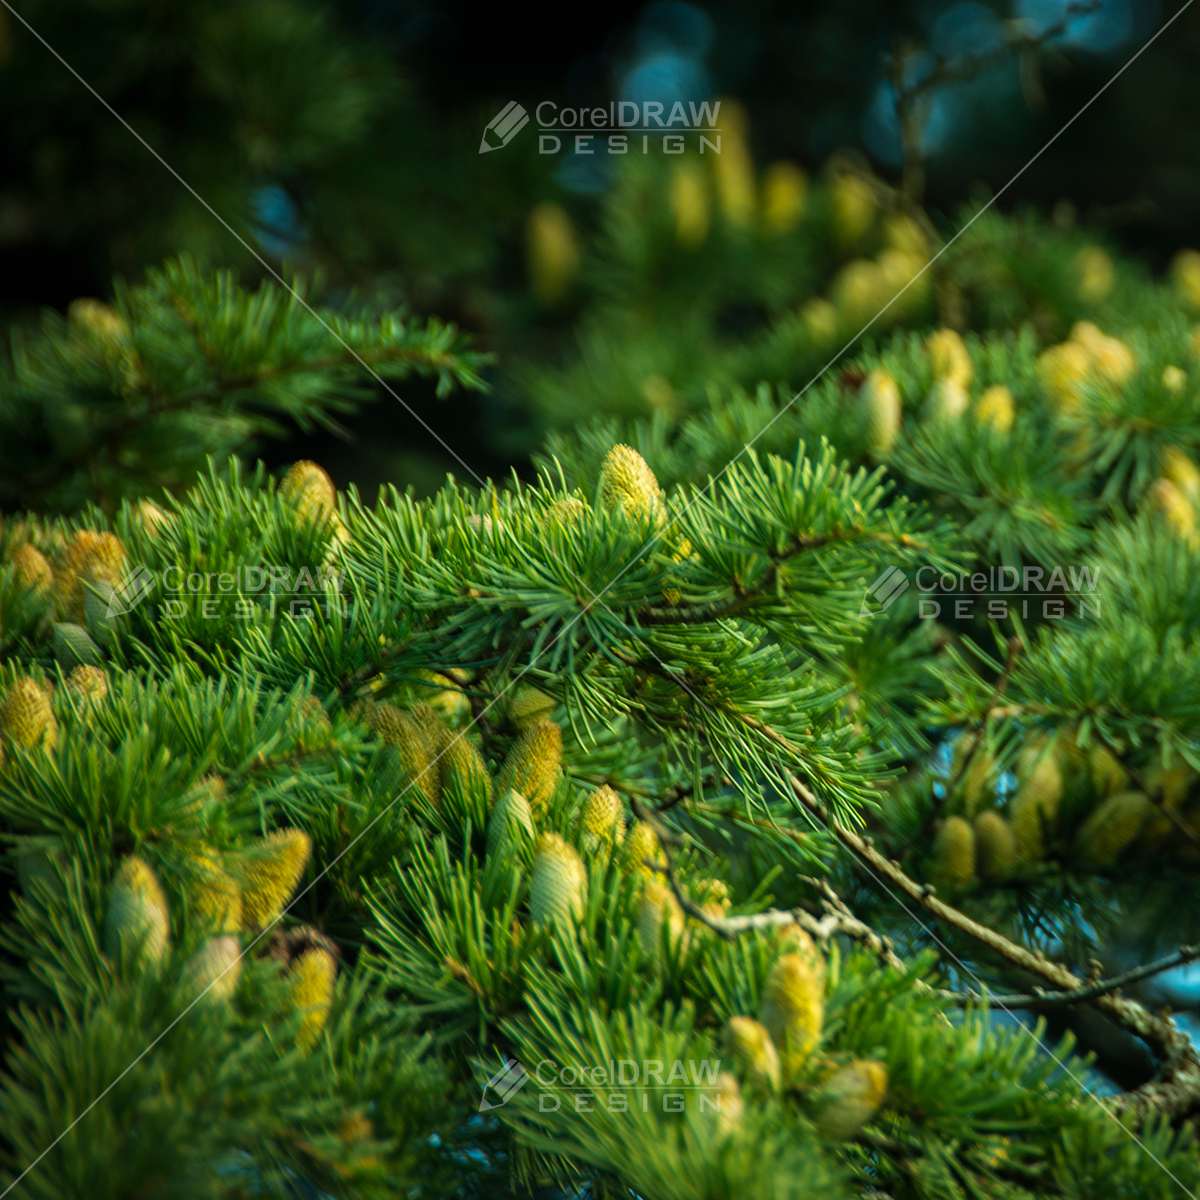 Close-up of Pine Tree